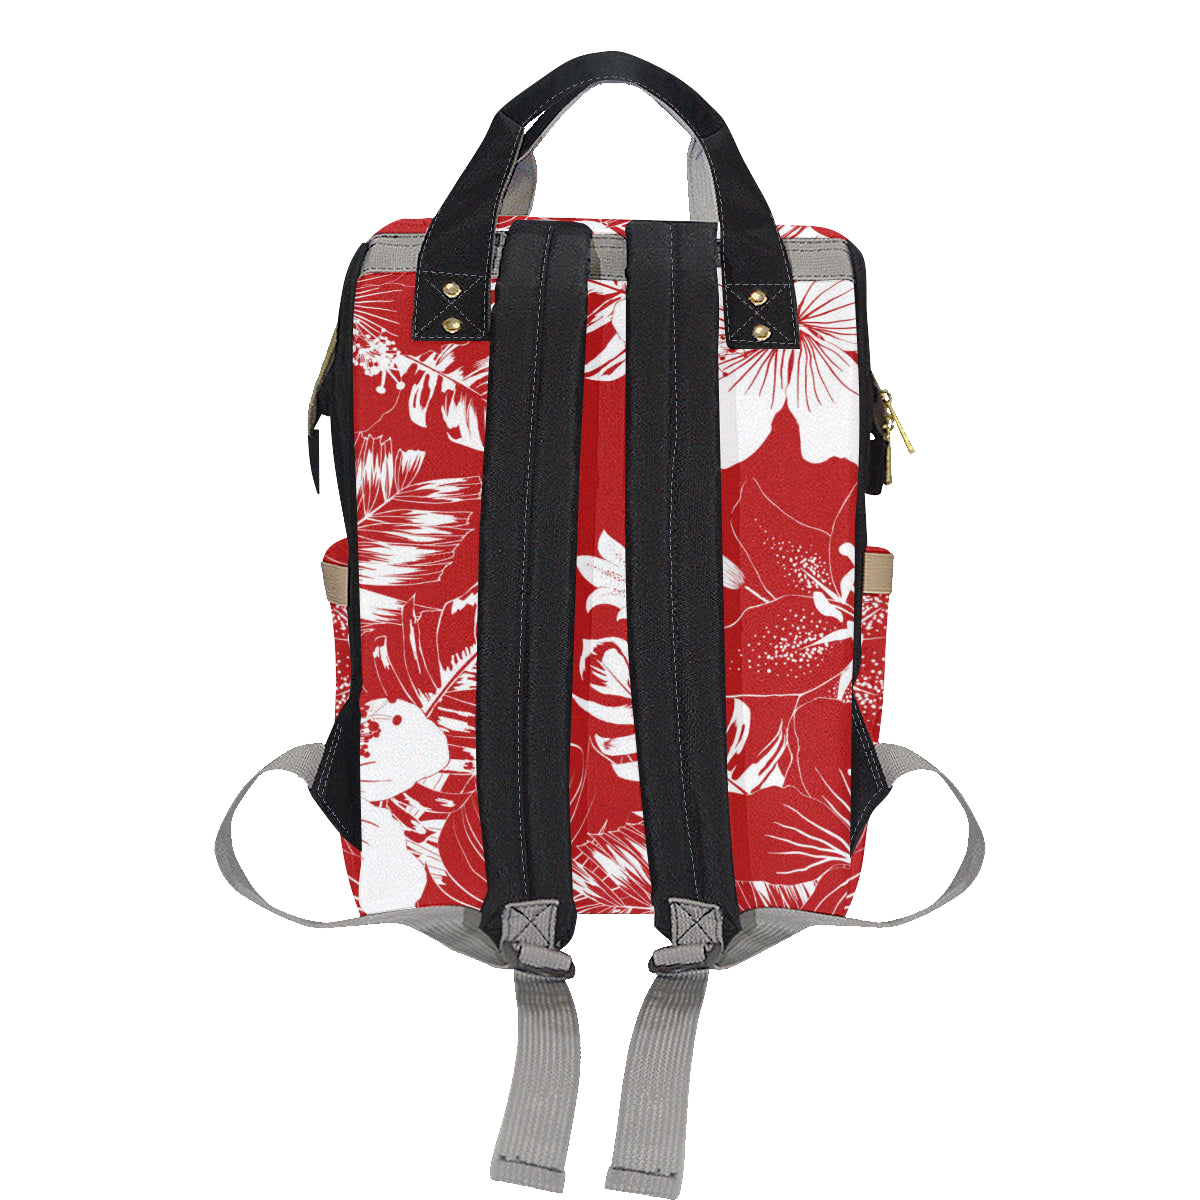 Guam Red Floral Baby Diaper Backpack Bag